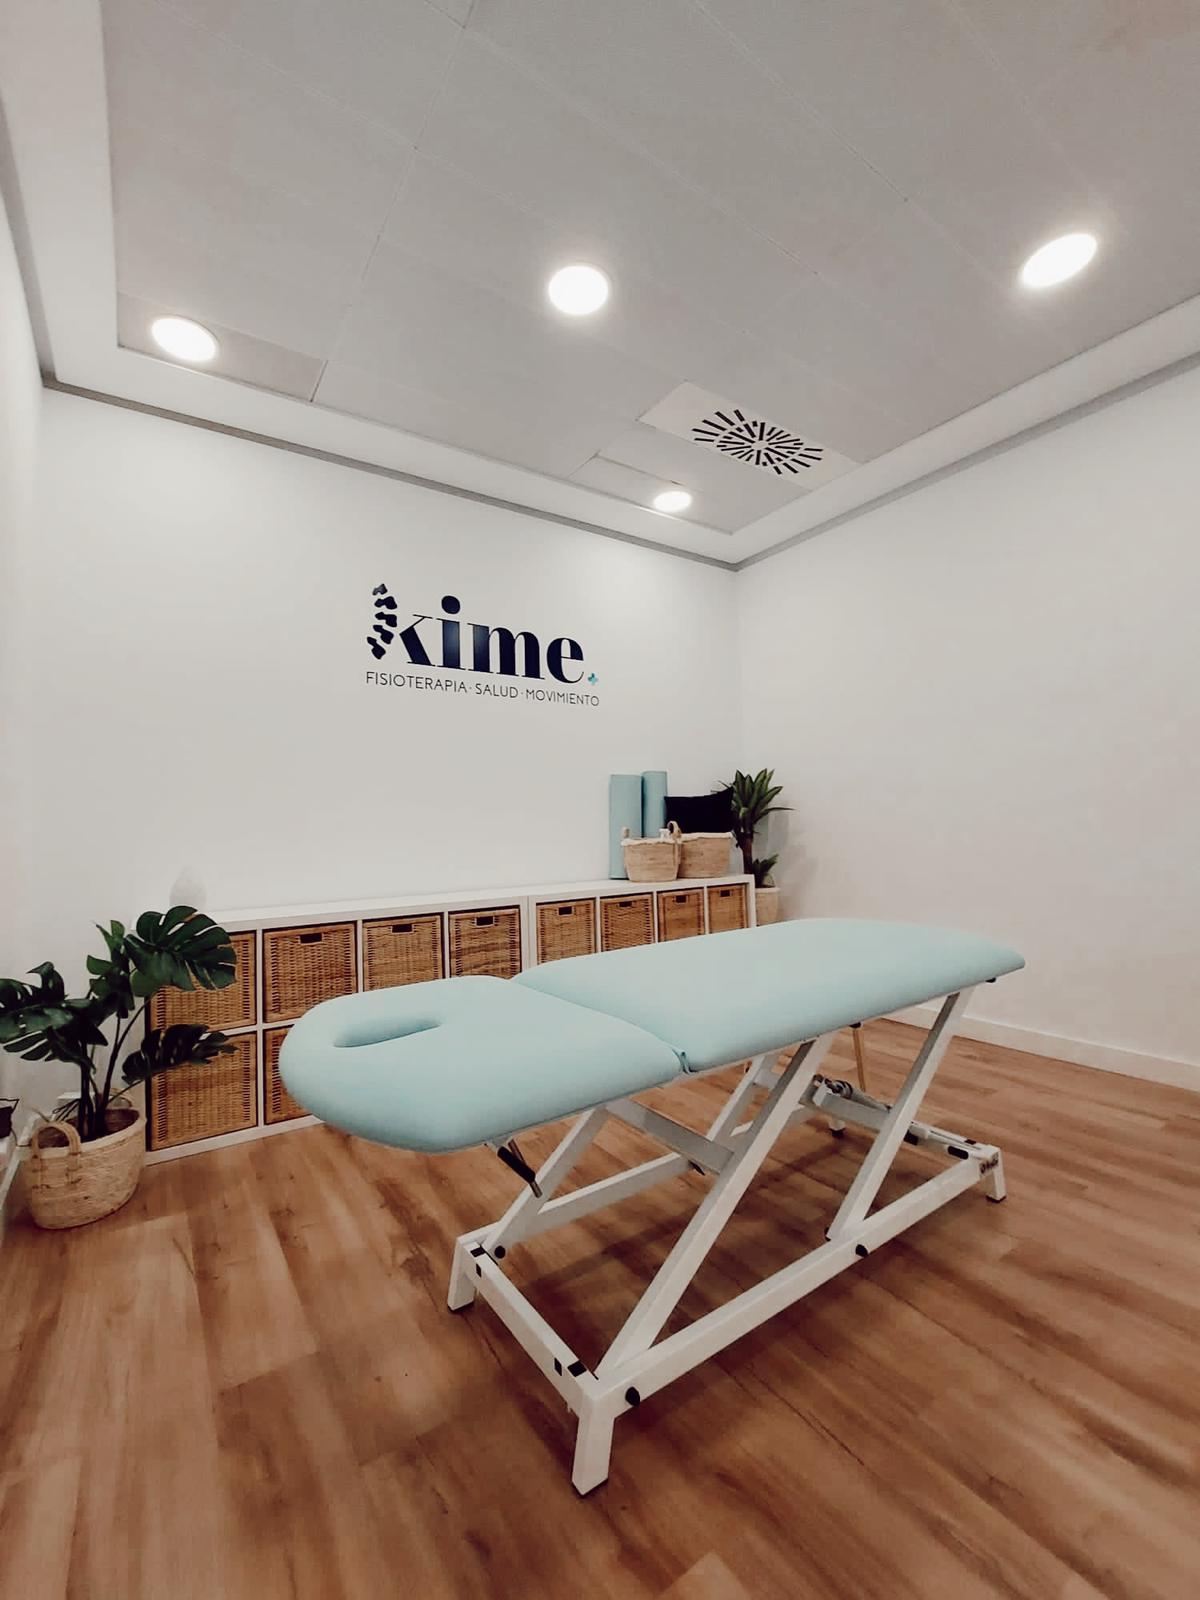 Images Kime center - fisioterapia en torrent